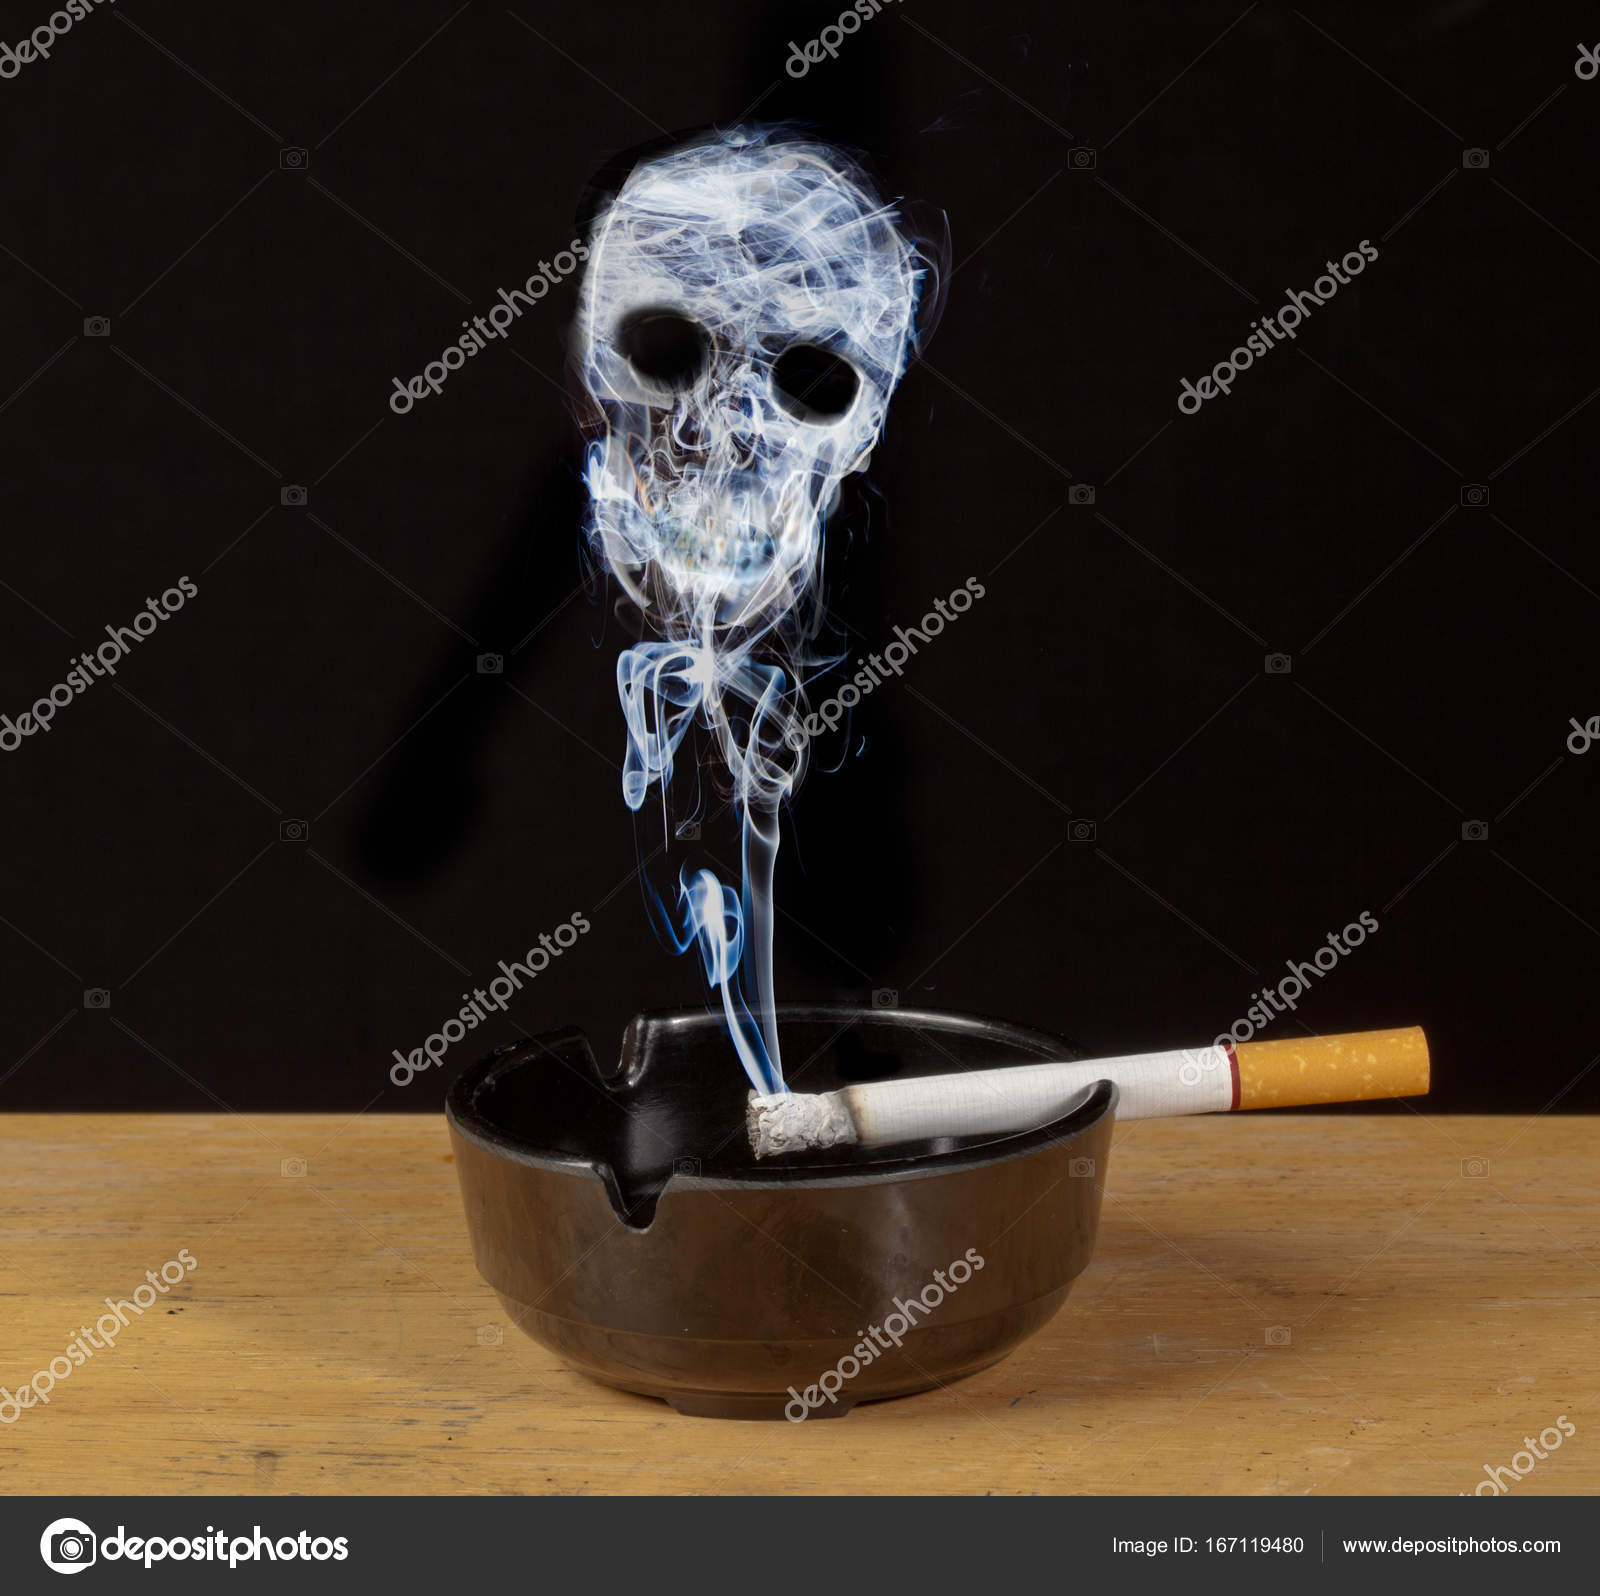 depositphotos_167119480-stock-photo-death-in-the-future-smoke.jpg